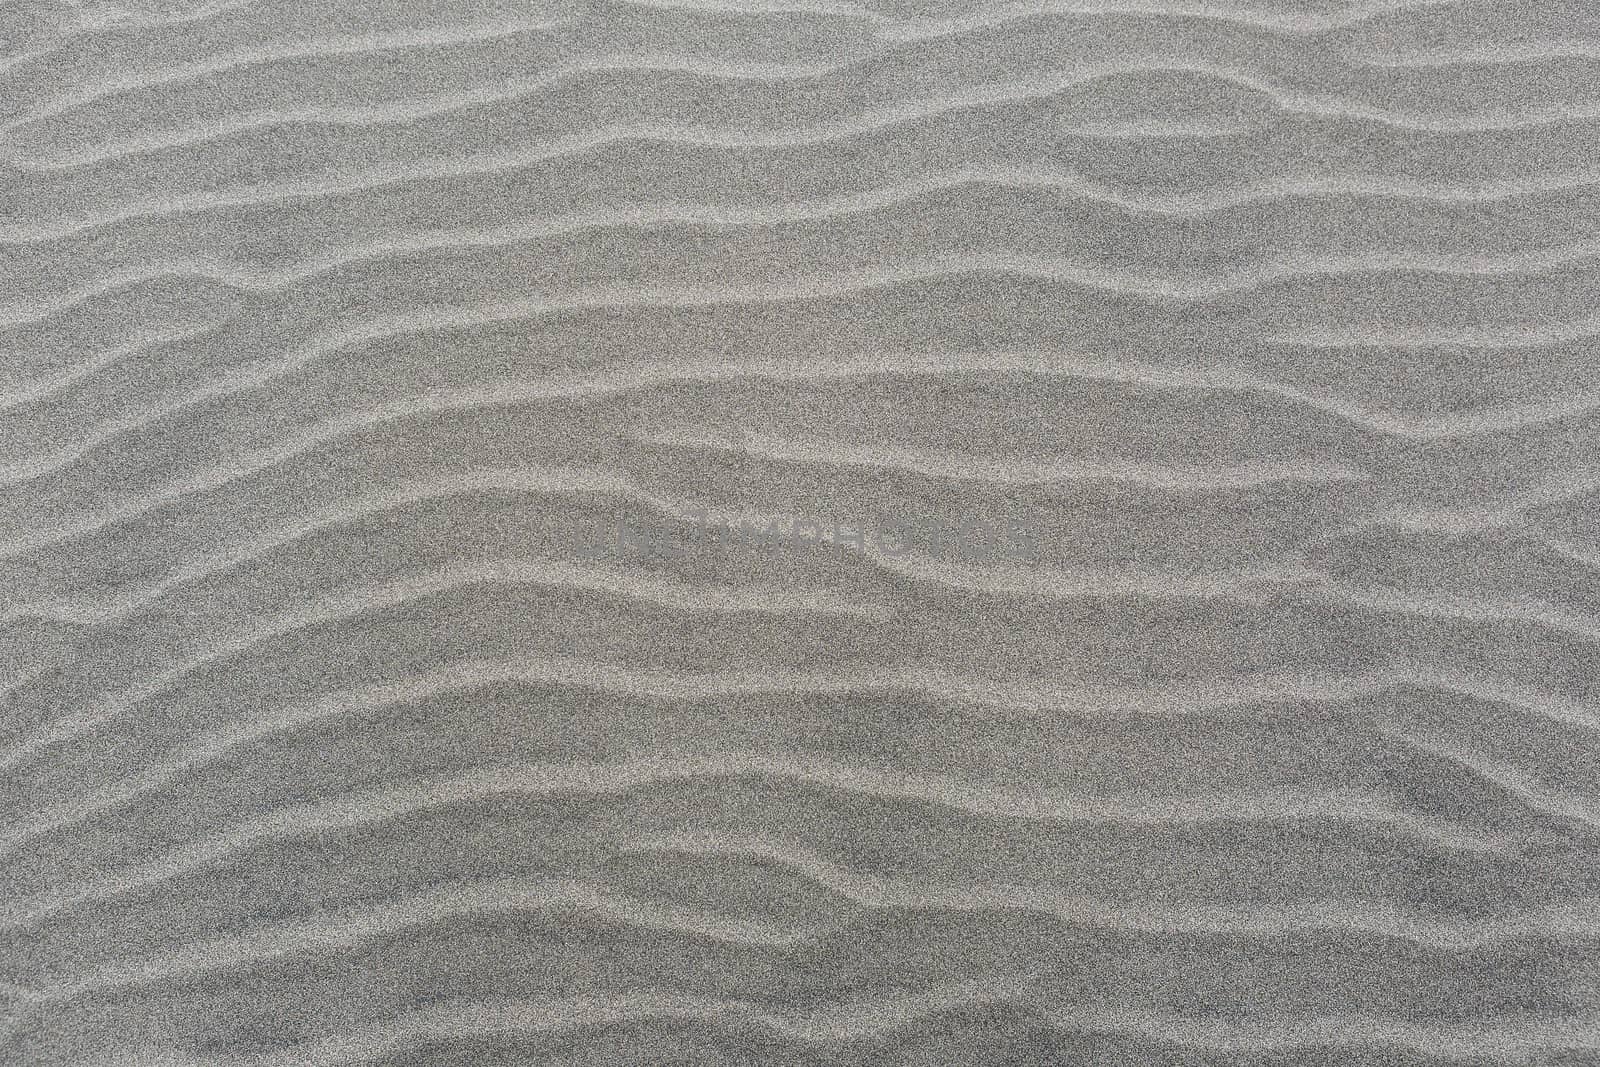 Windswept sand dune wavy lines pattern on sandy beach background